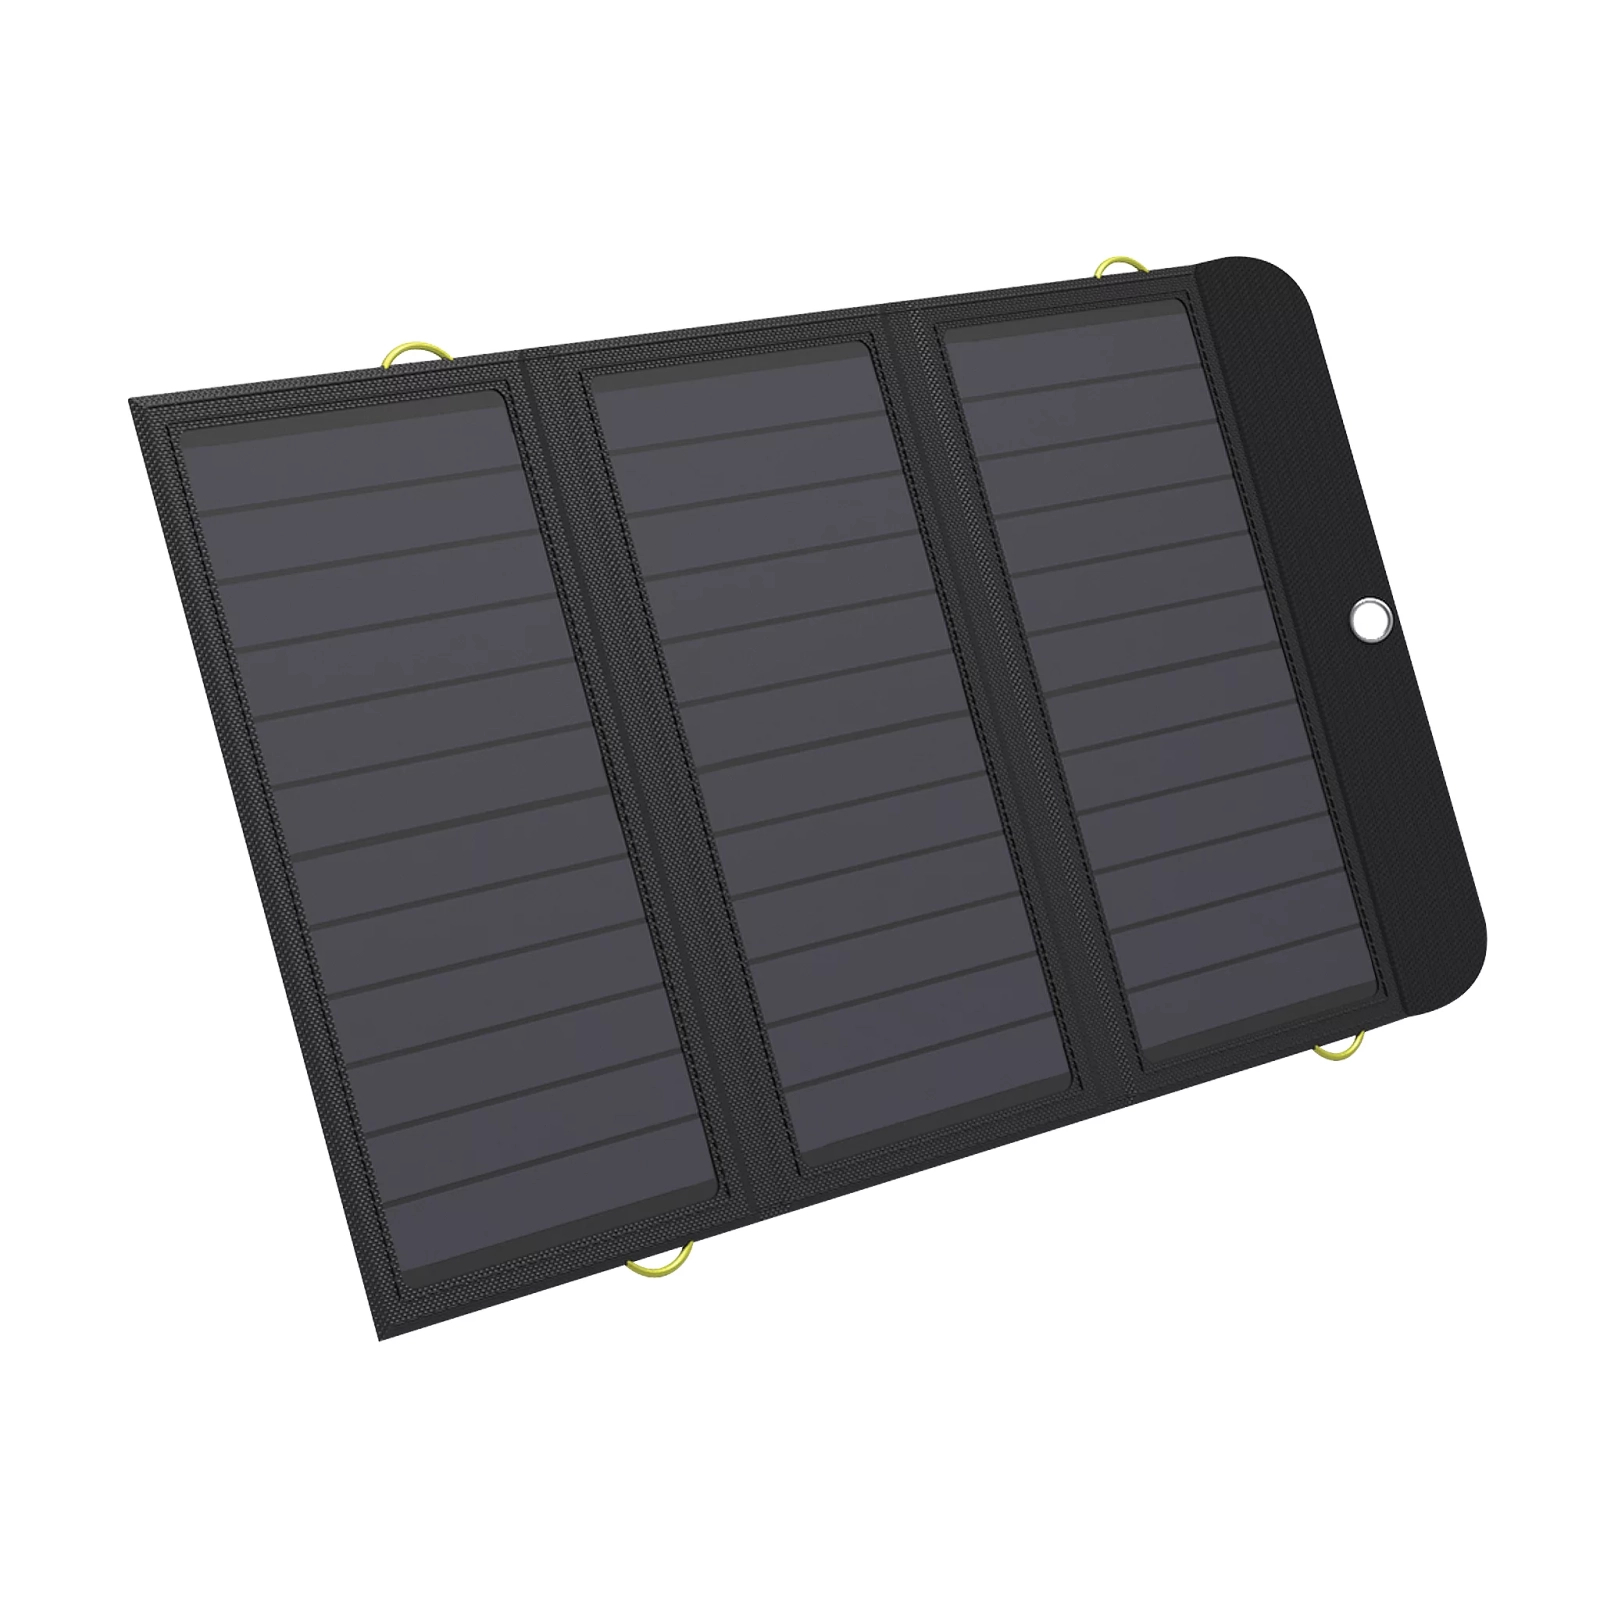 Батарея универсальная Sandberg 10000mAh, Solar Charger 21W, PD/18W, QC/3.0, USB-C, USB-A*2 (420-55)